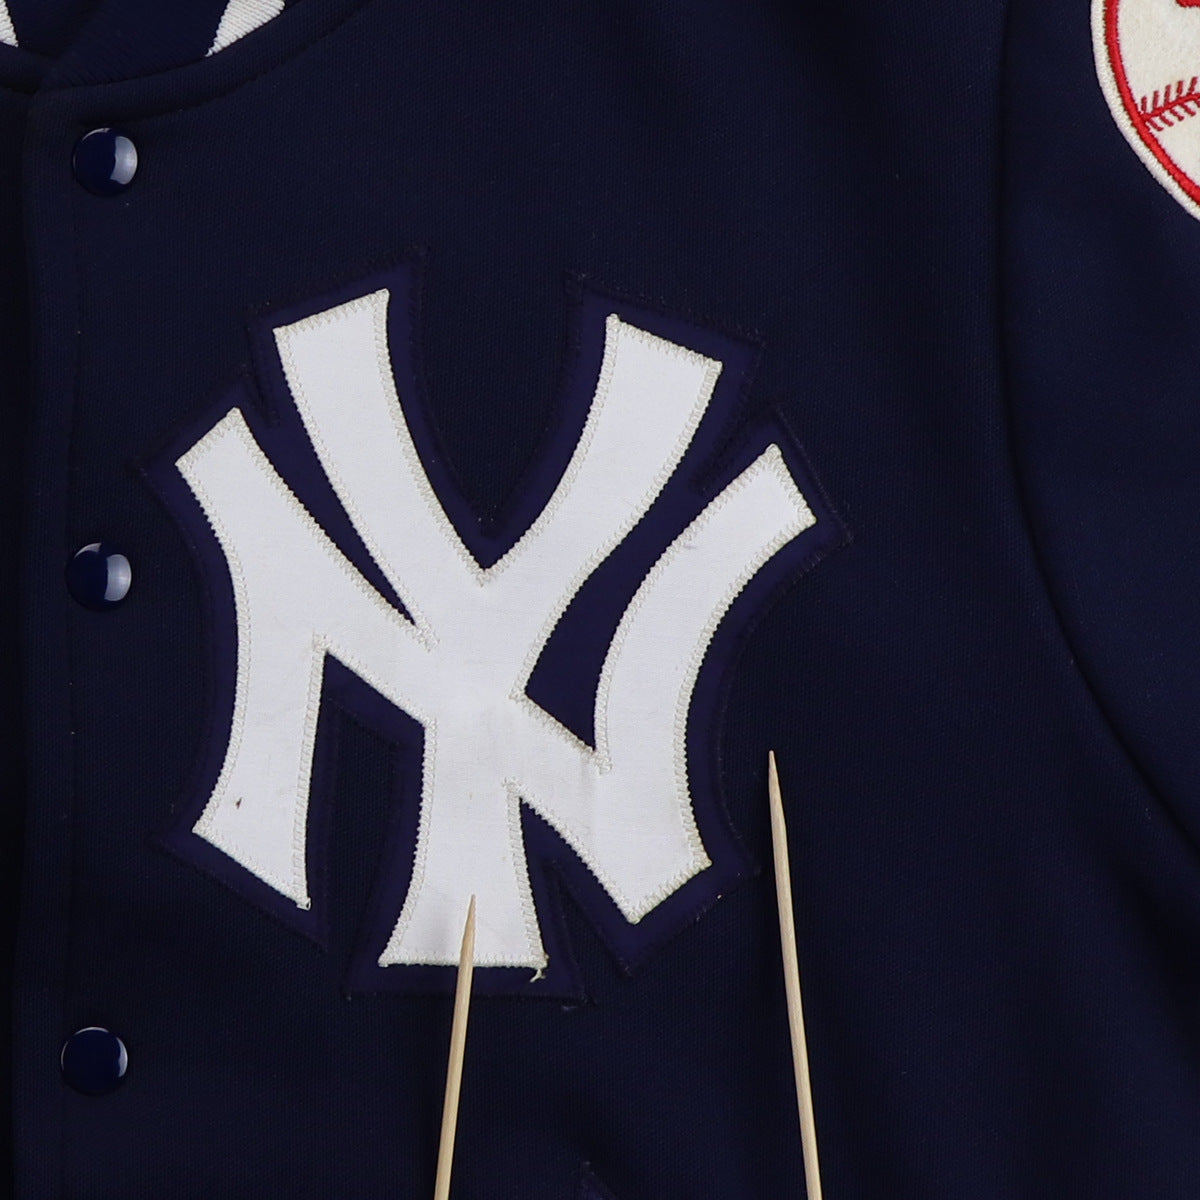 1970s New York Yankees Jacket